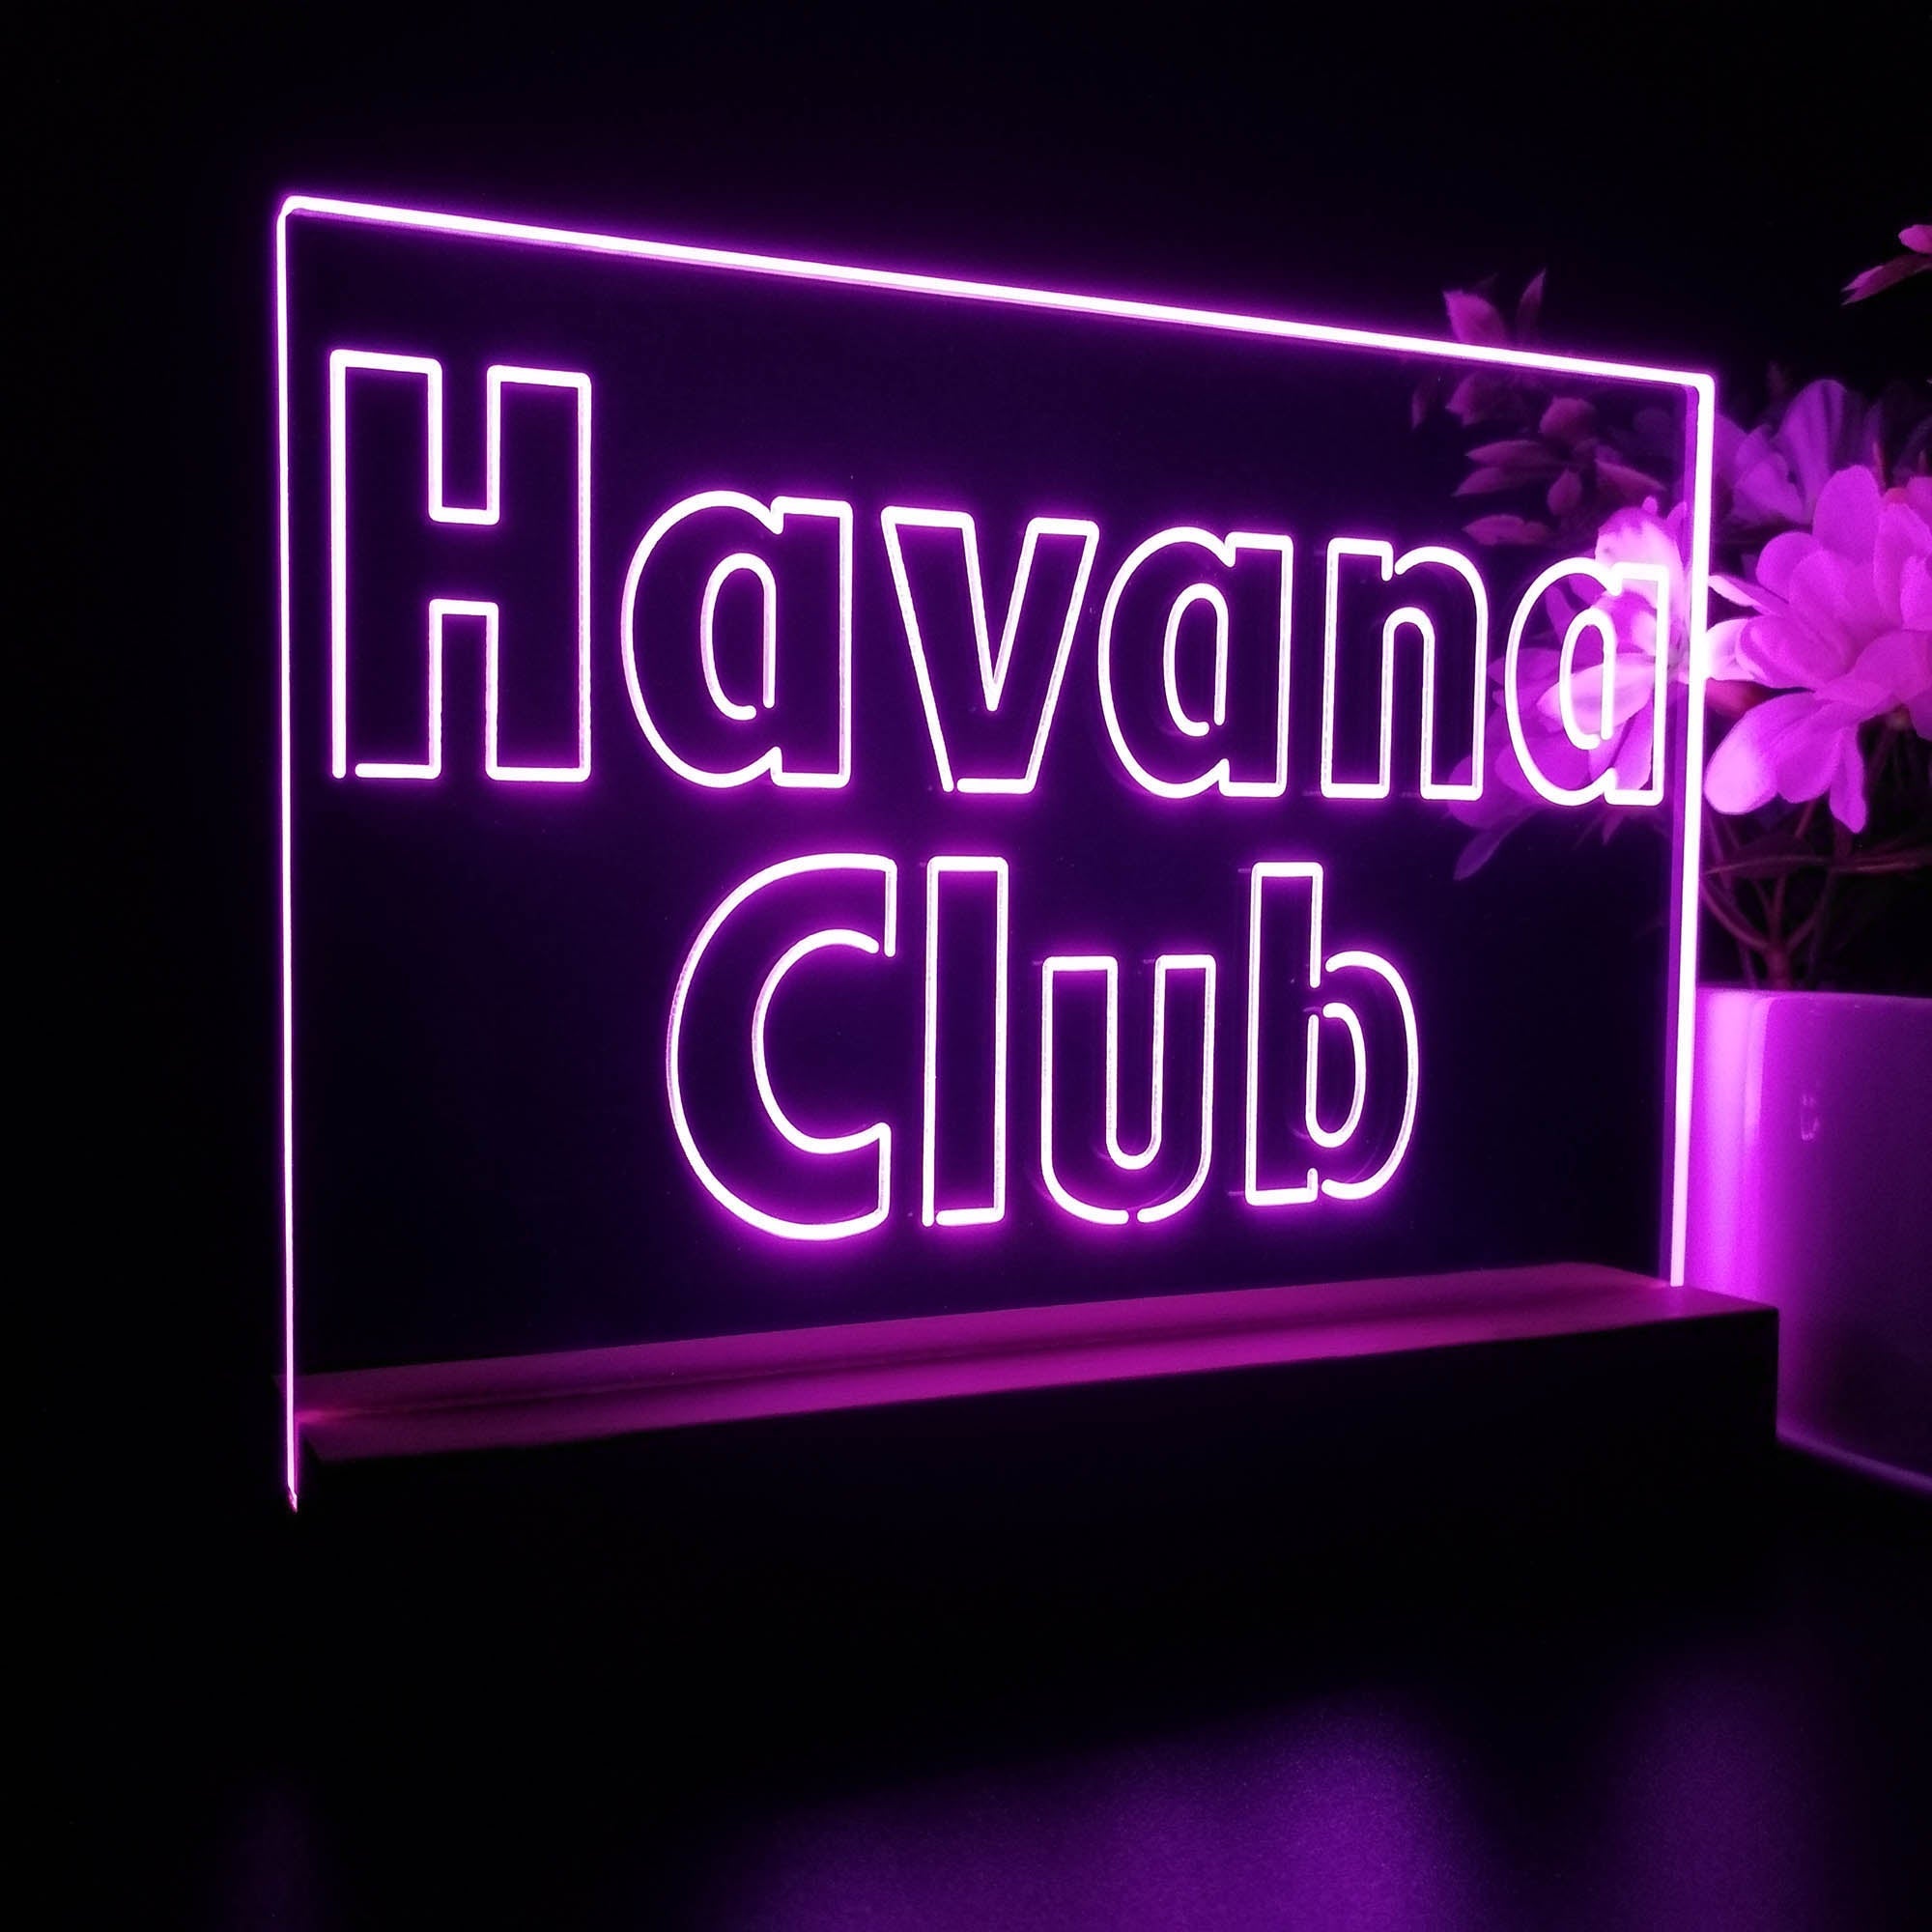 Havanas Club Rum Neon Sign Pub Bar Decor Lamp